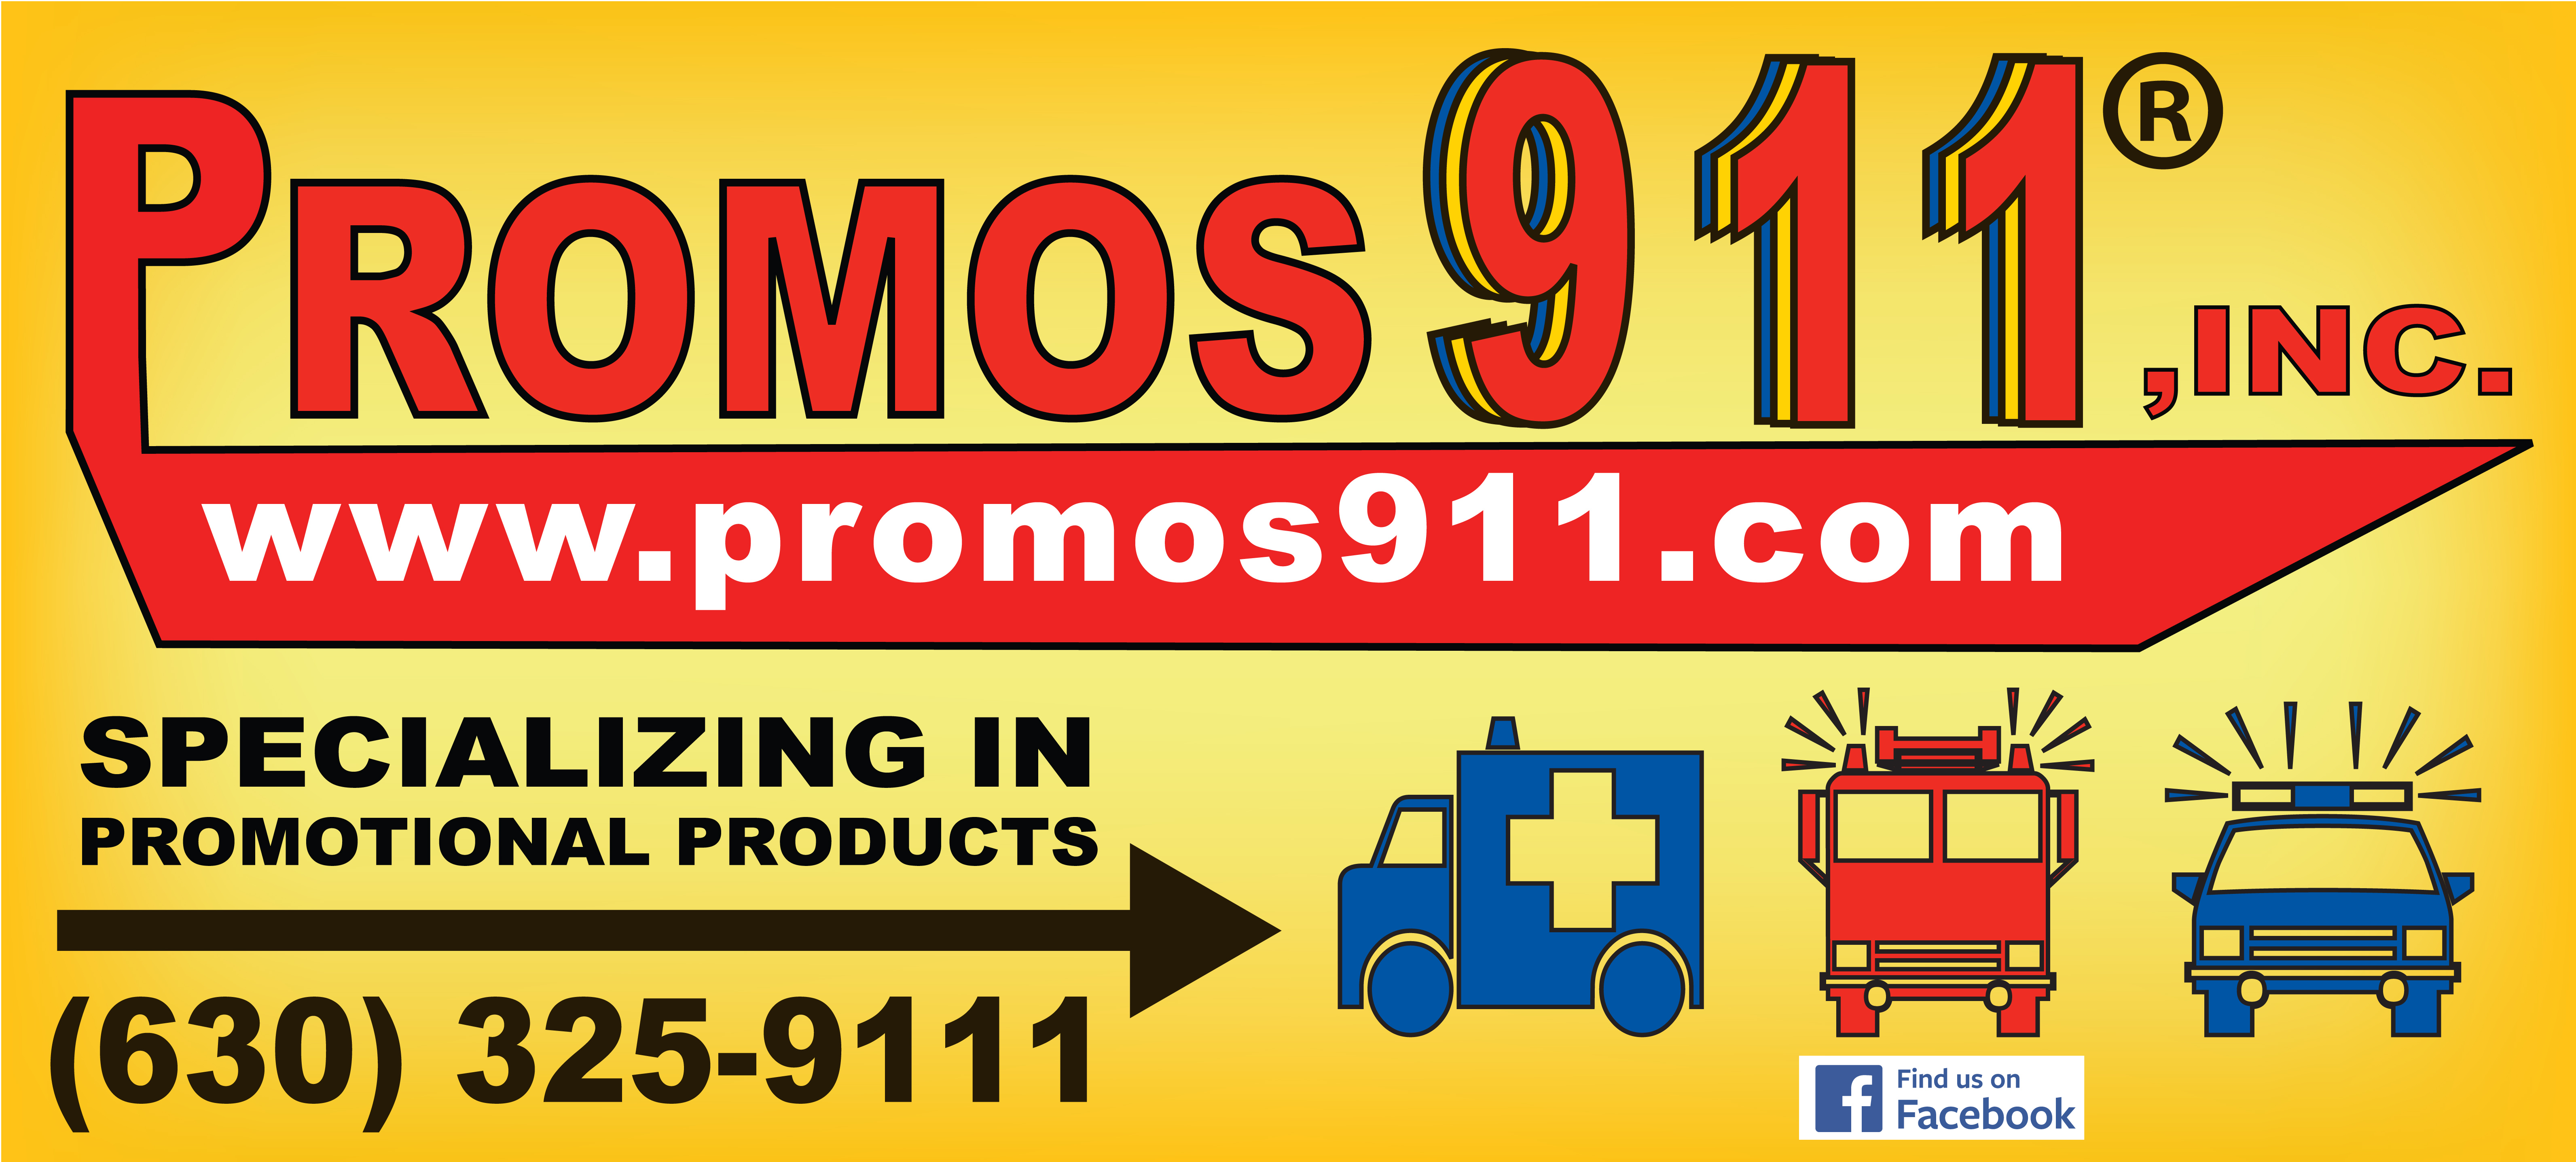 Promos 911, Inc